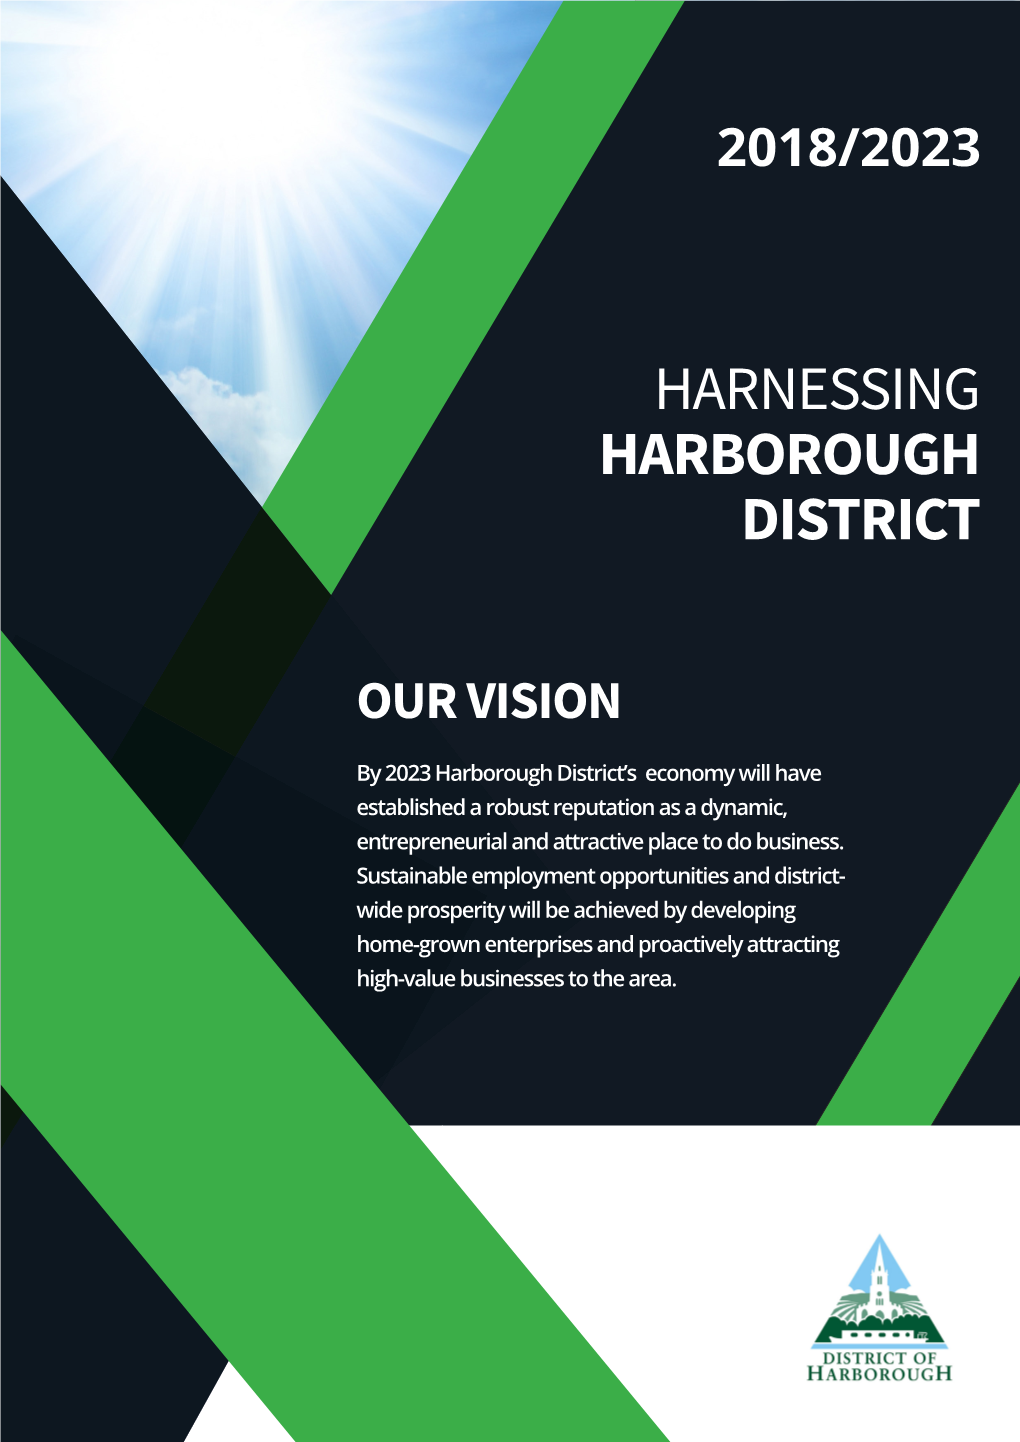 Harnessing Harborough District